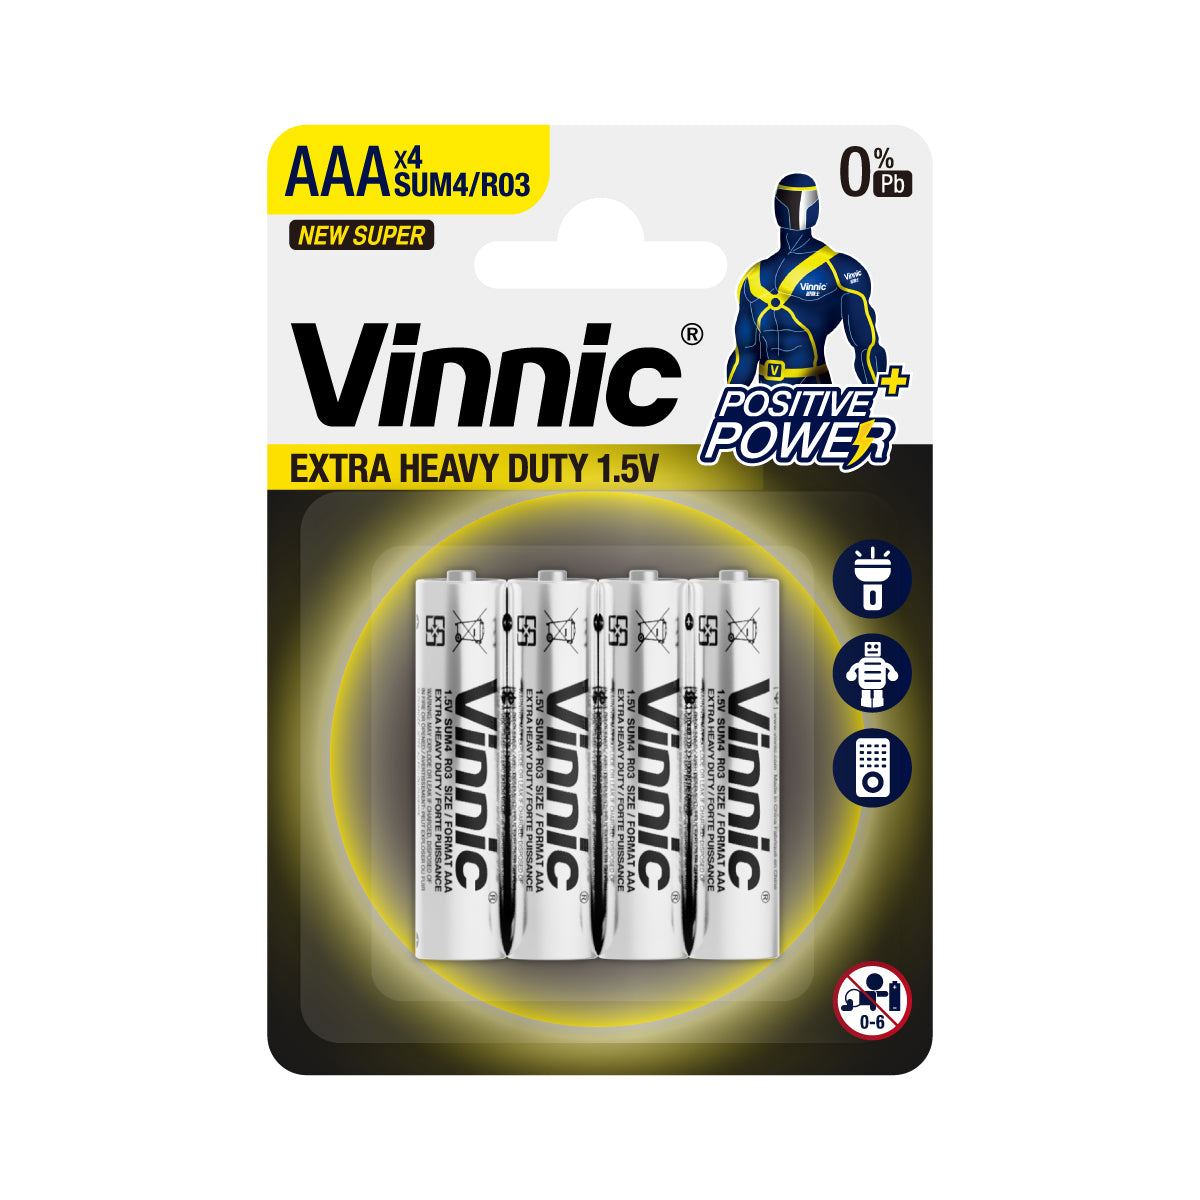 Vinnic Zinc Chloride Battery Super Heavy Duty AAA SUM4 / R03 (1.5V) - 4Count